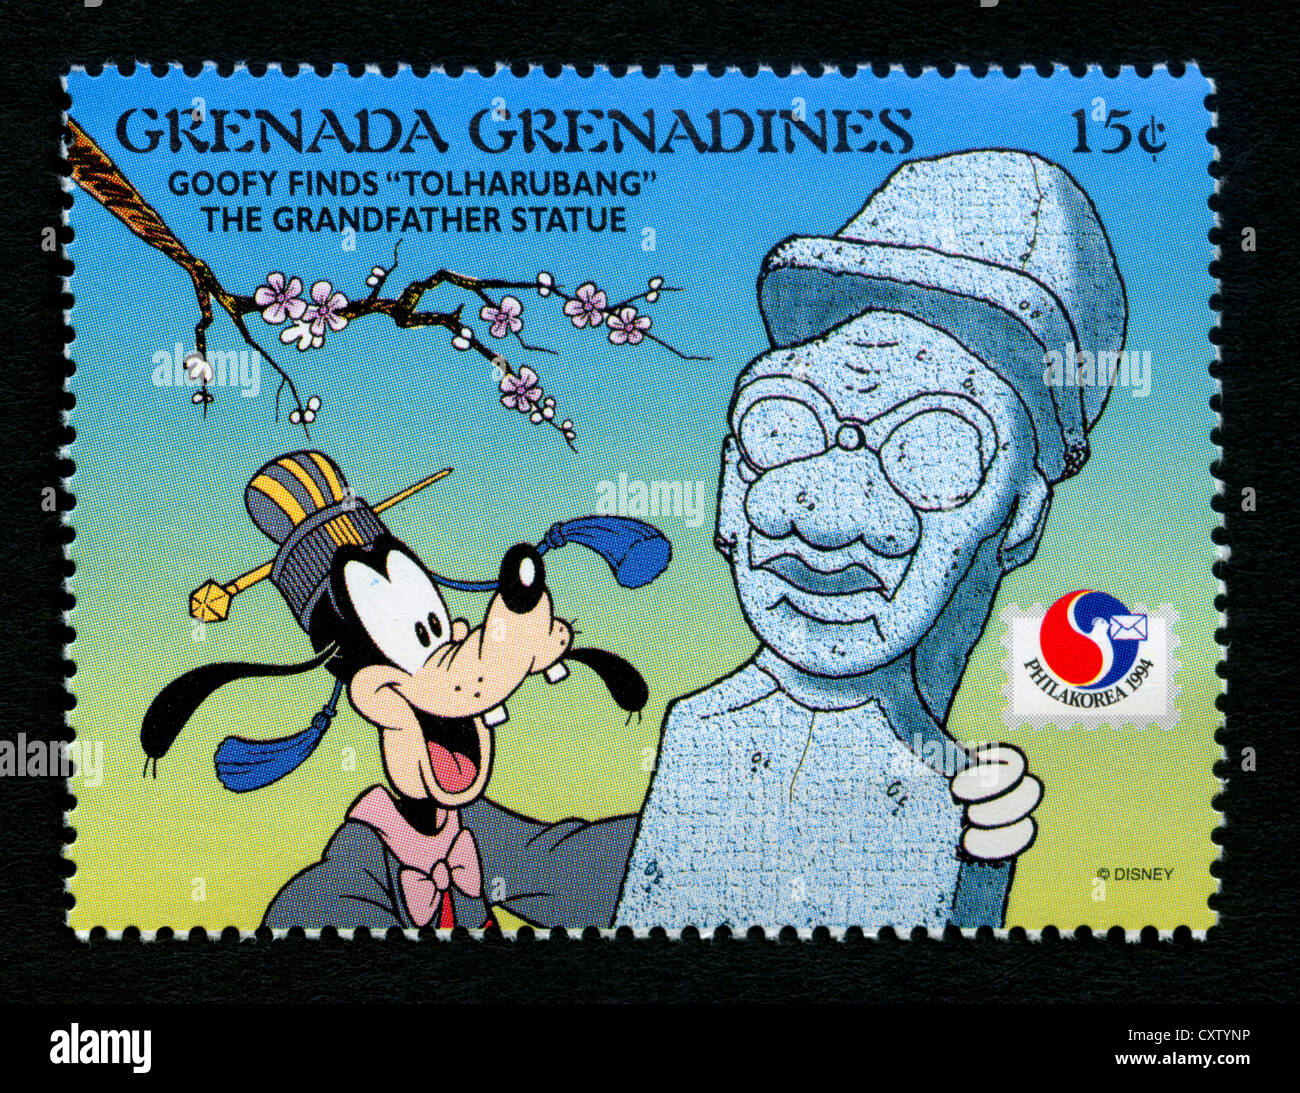 Grenada postage stamp - Disney cartoon characters - Goofy Stock Photo